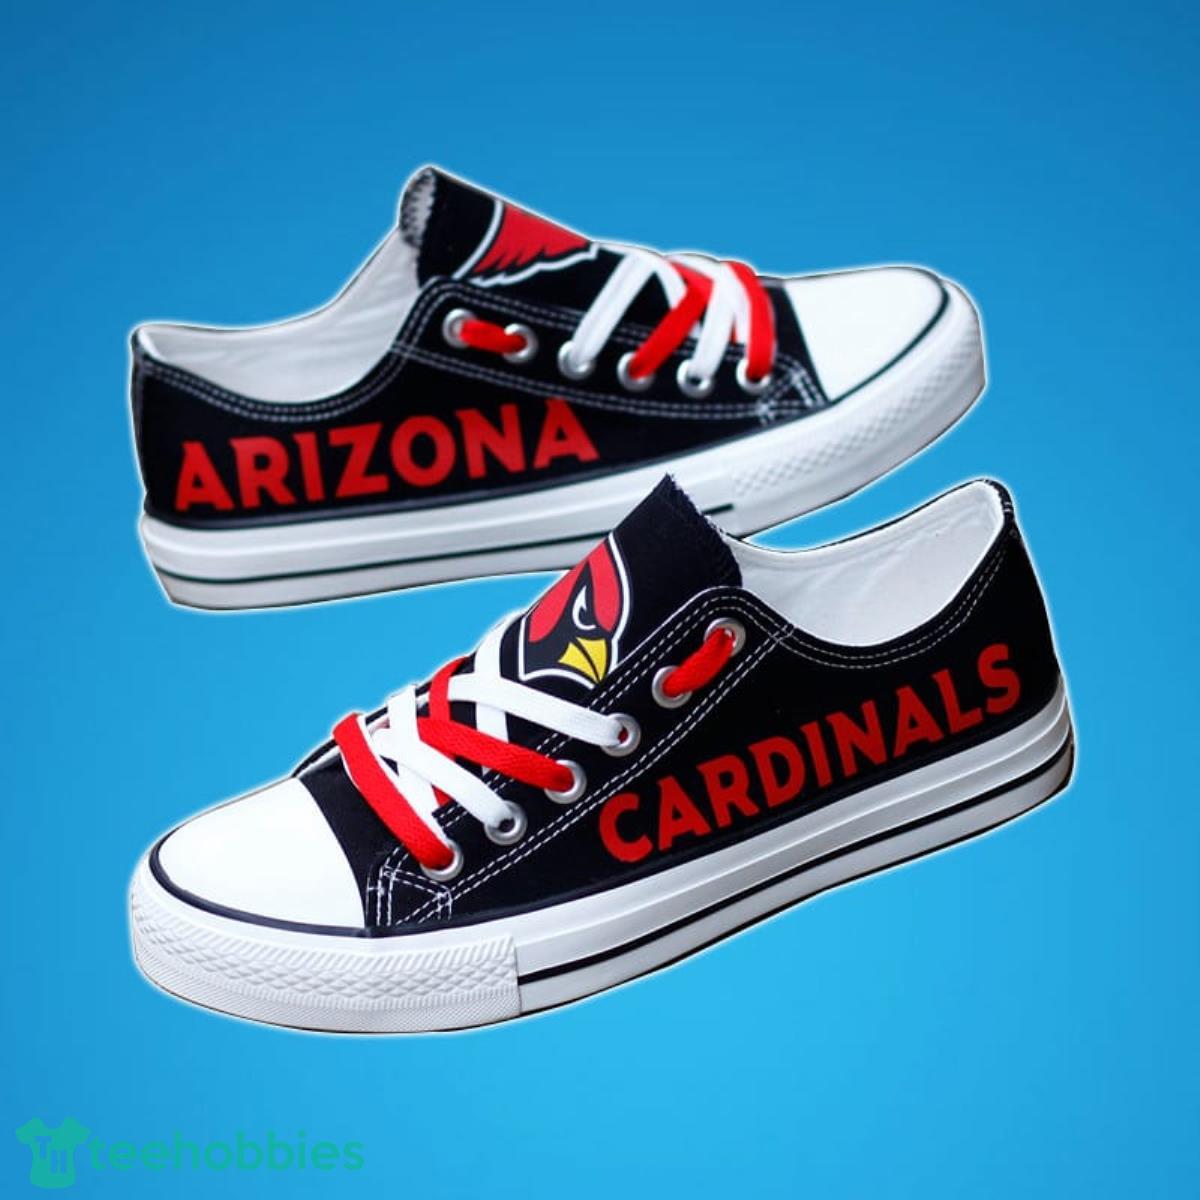 Arizona Cardinals New Low Top Shoes BG23 Product Photo 2